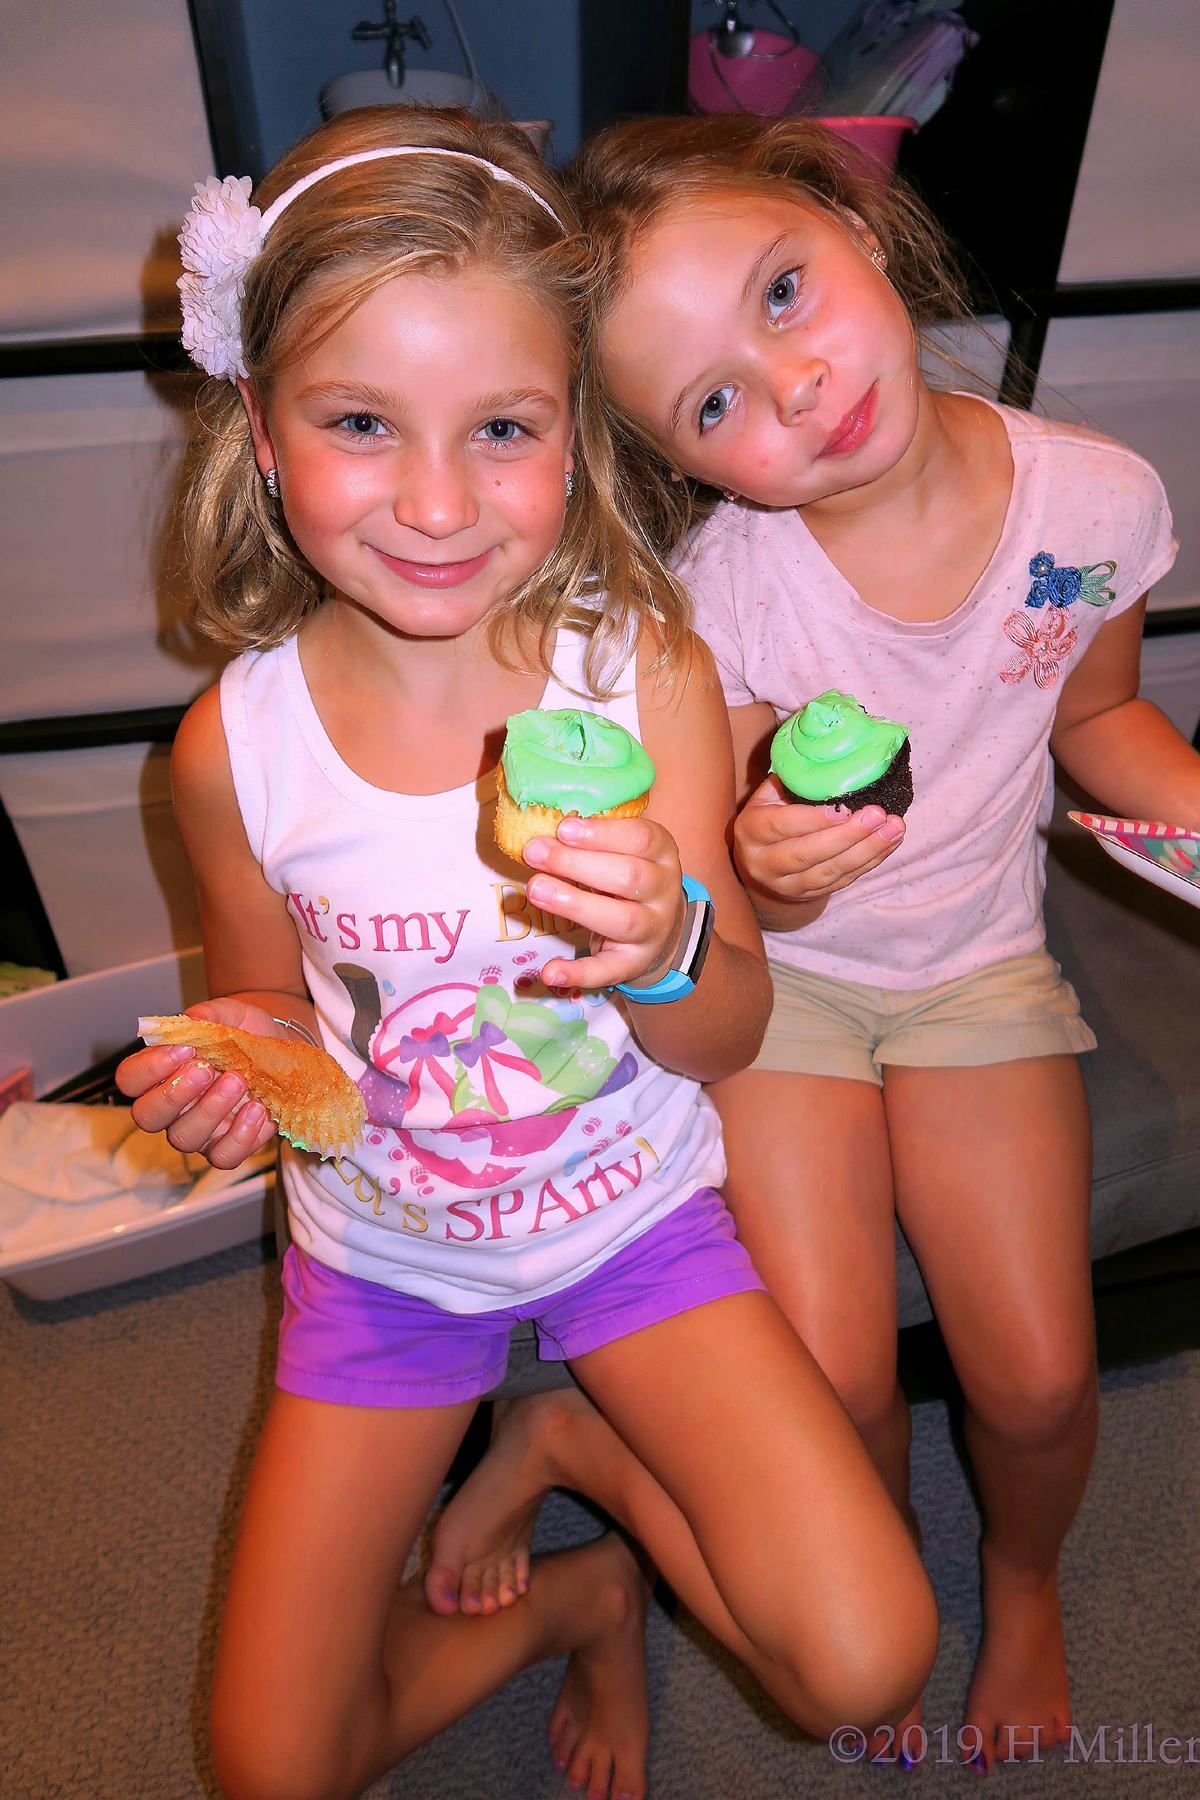 Enjoying Cupcakes Together At The Spa! 1